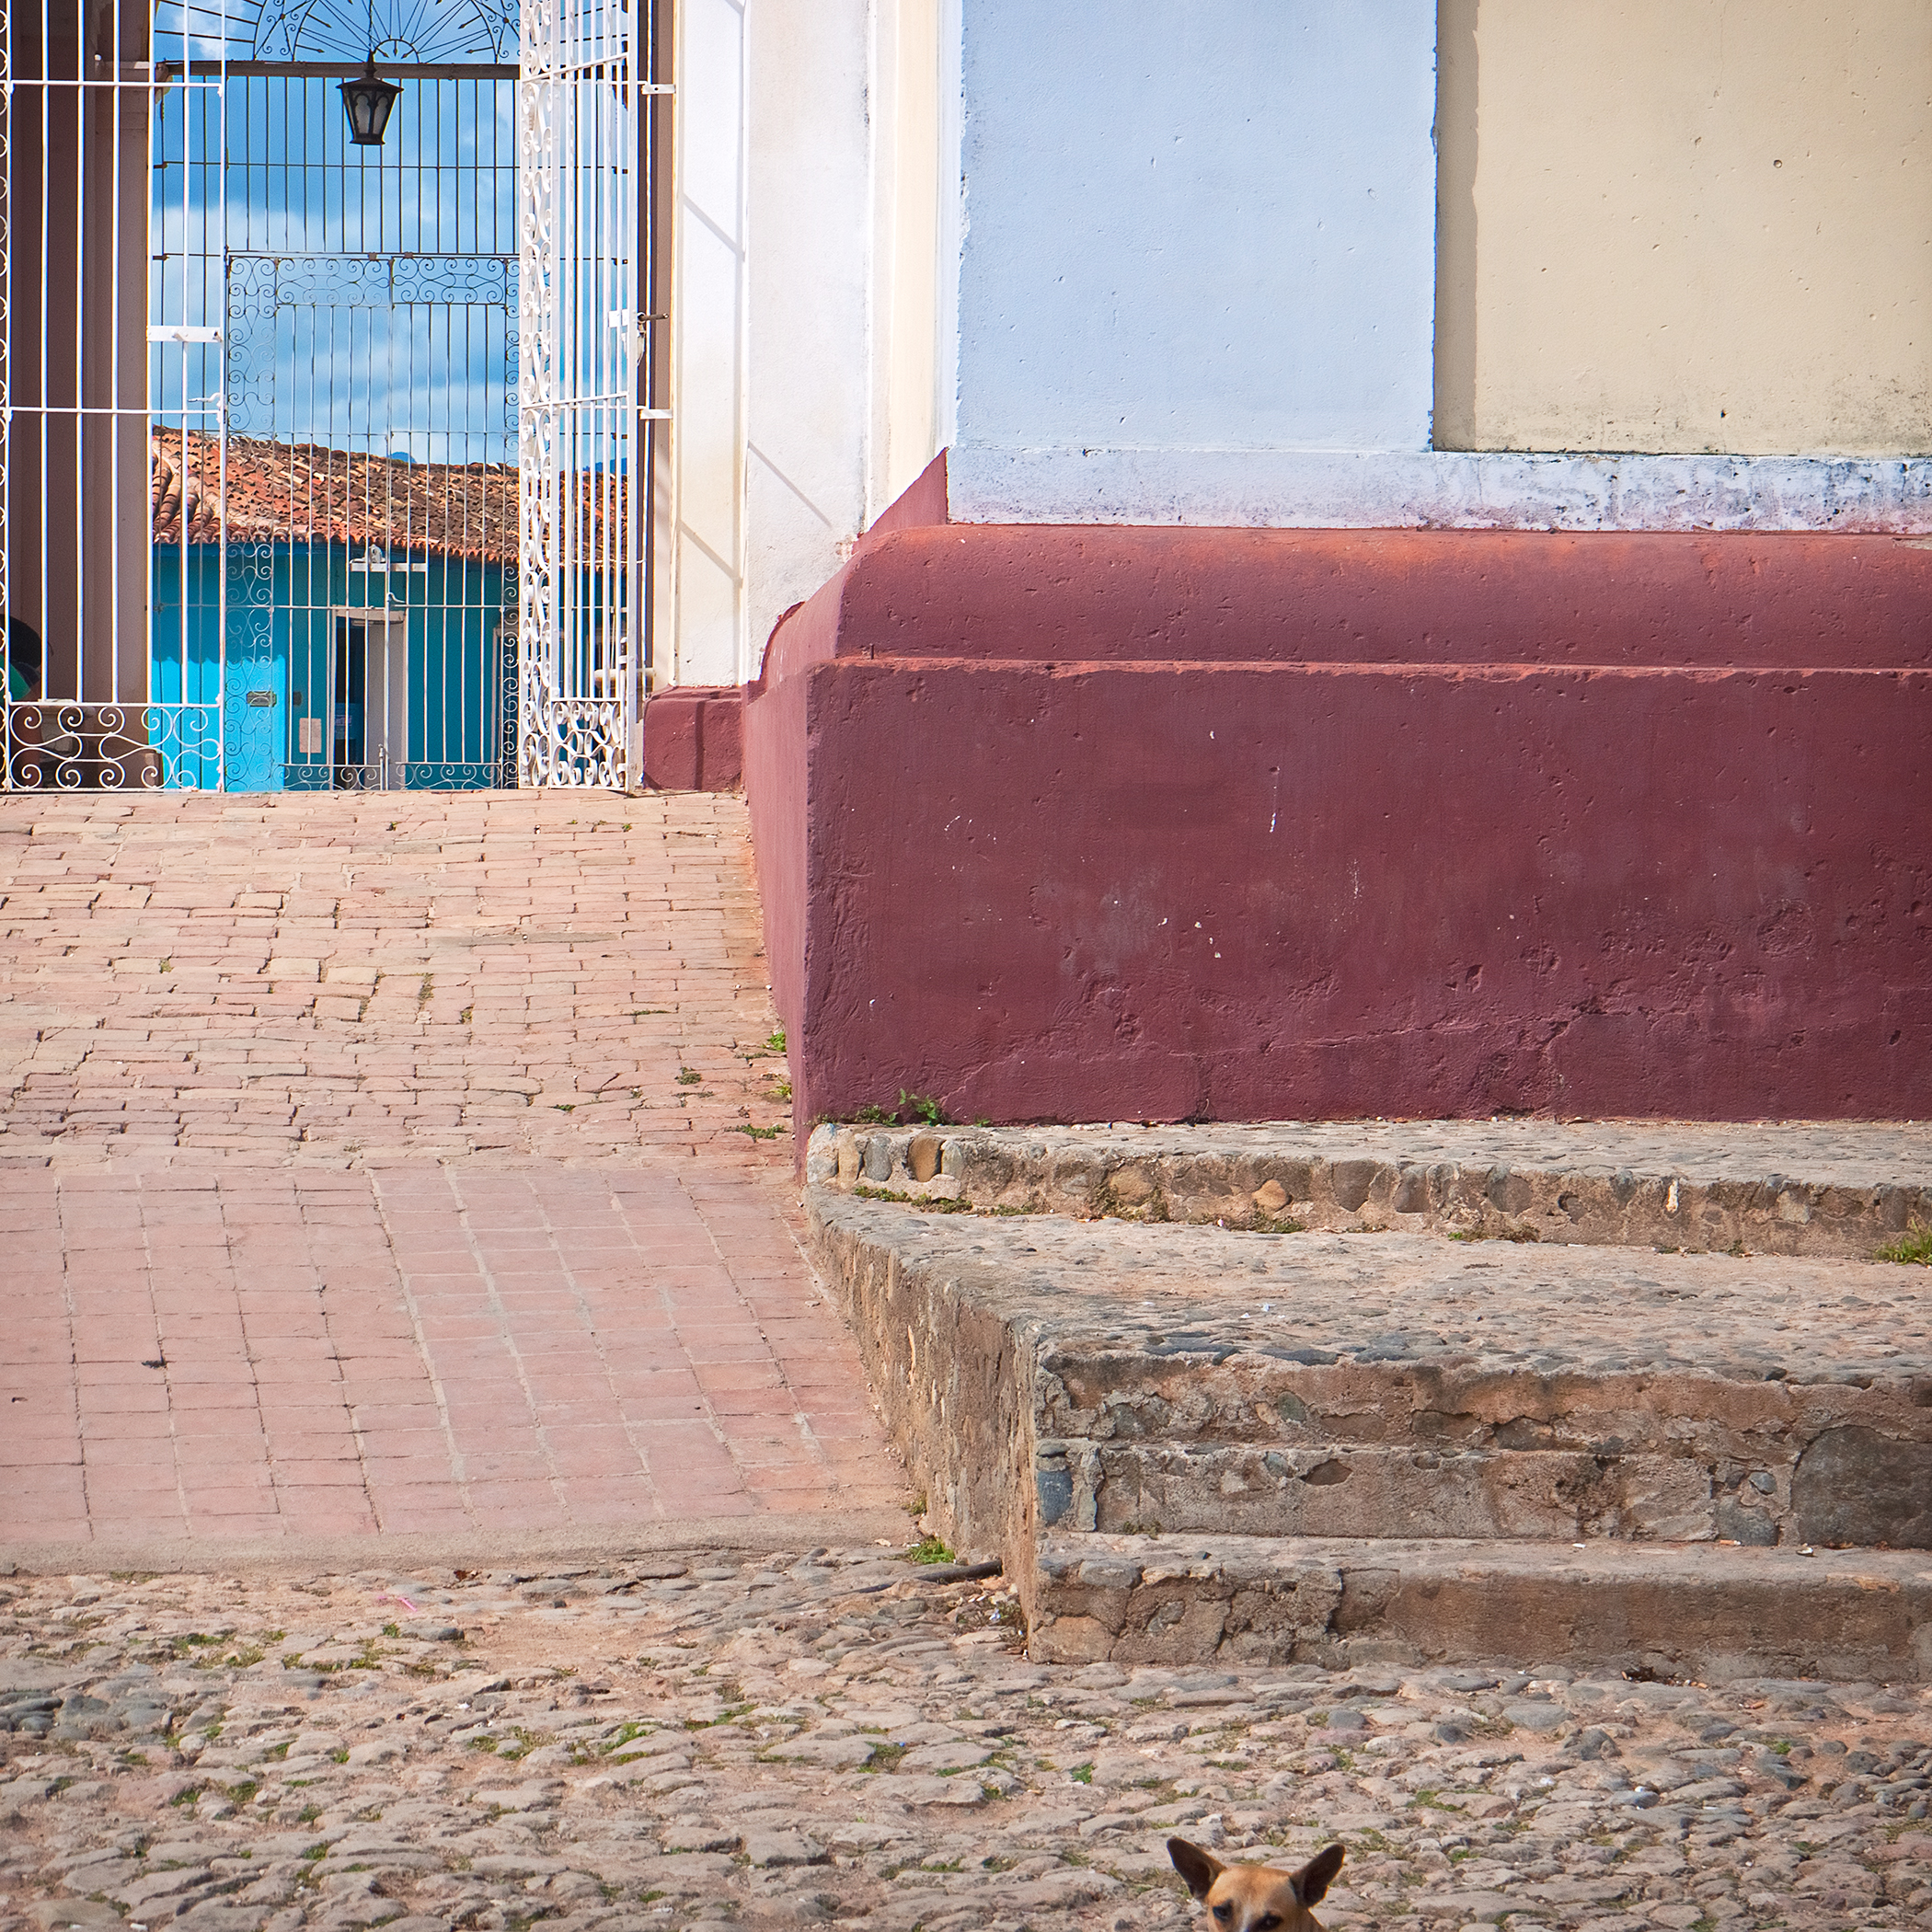 Dog in Door by Elizabeth Matheson, photograph, at Craven Allen Gallery